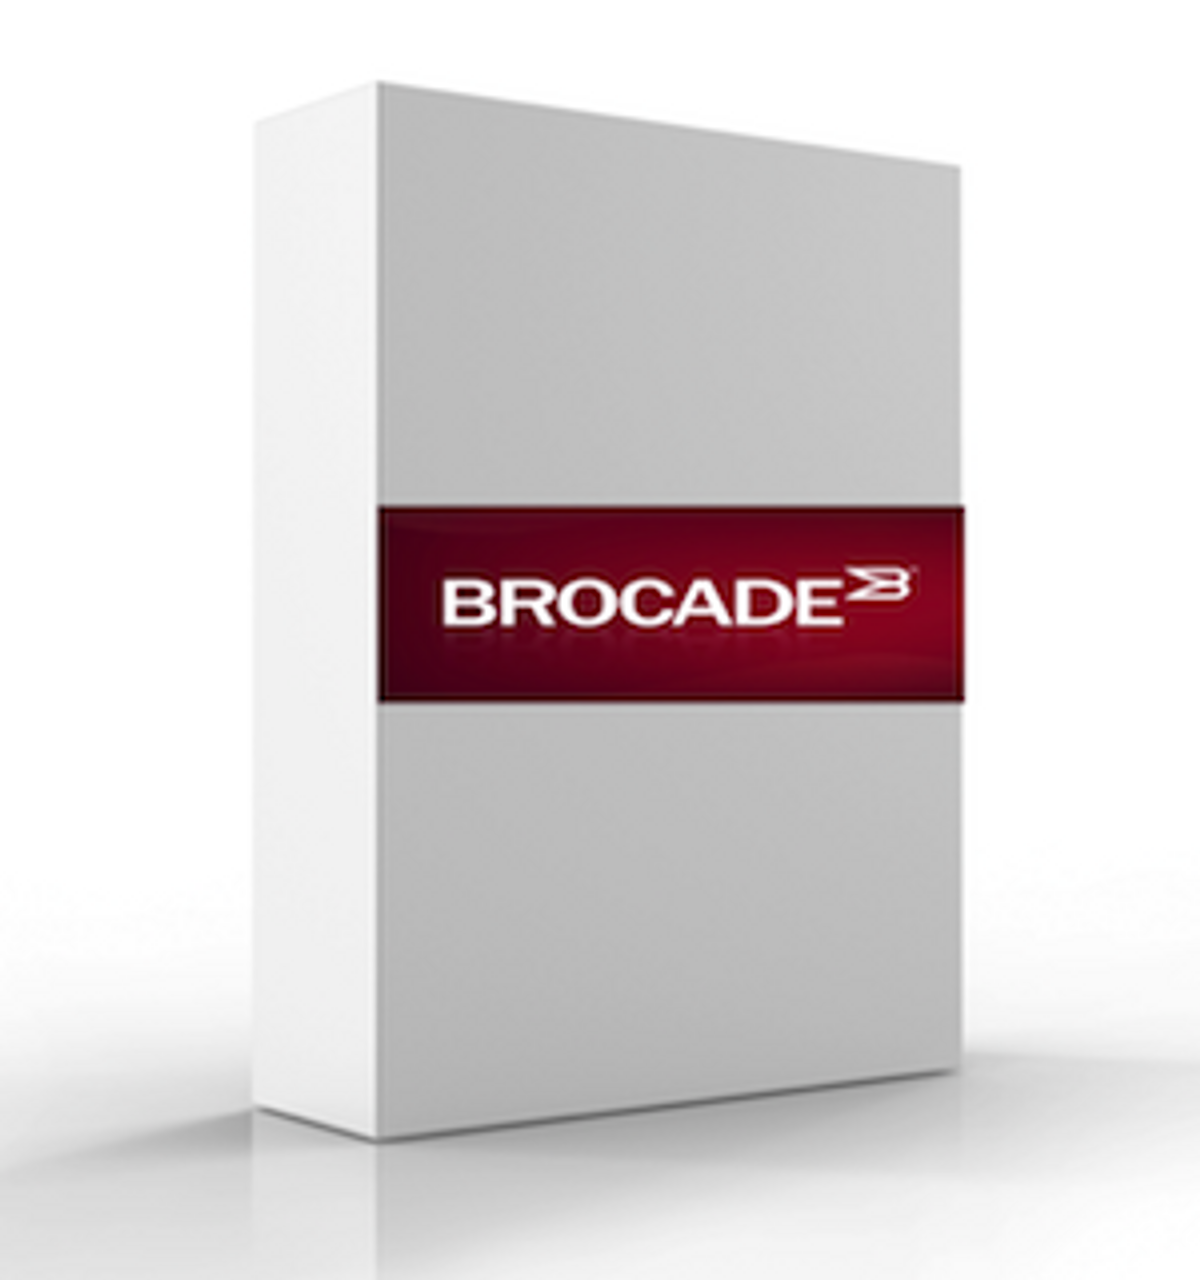 BR-MENTEB4-01 - Brocade 6520 Enterprise Bundle  FWH, TRK, PRF, Ext Fabric